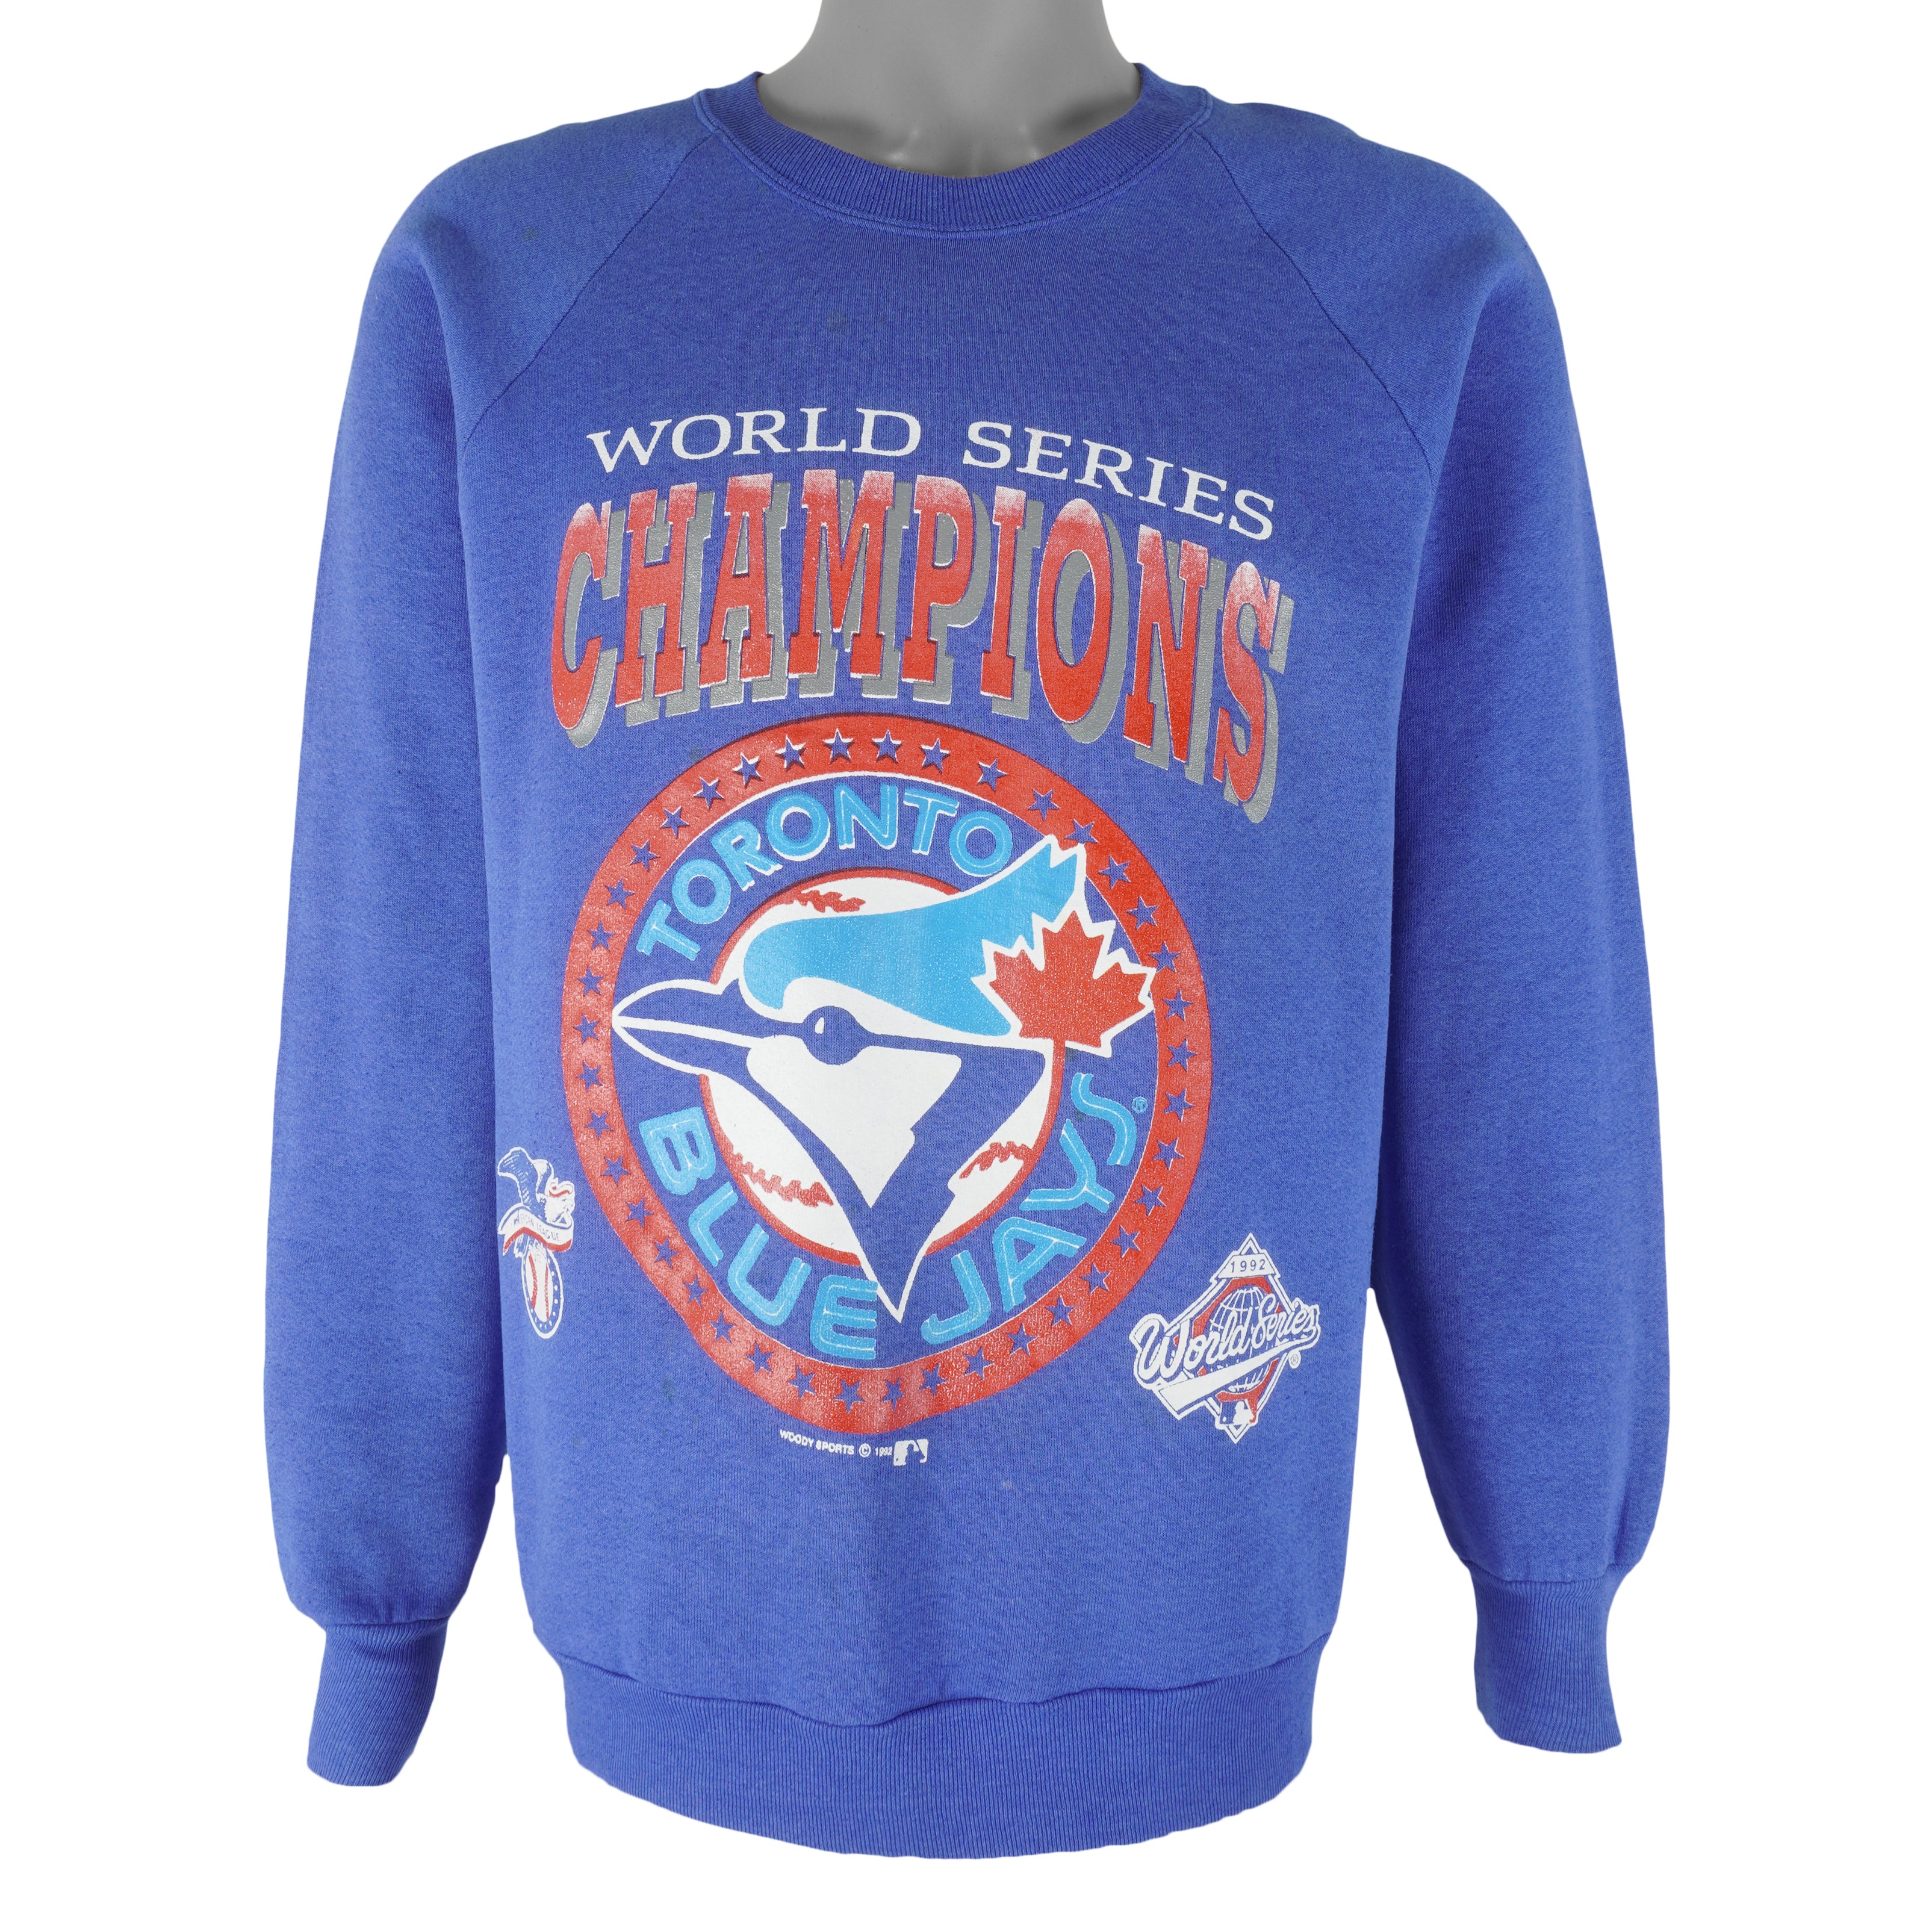 Vintage Toronto Blue Jay Crewneck Sweatshirt / T-shirt 